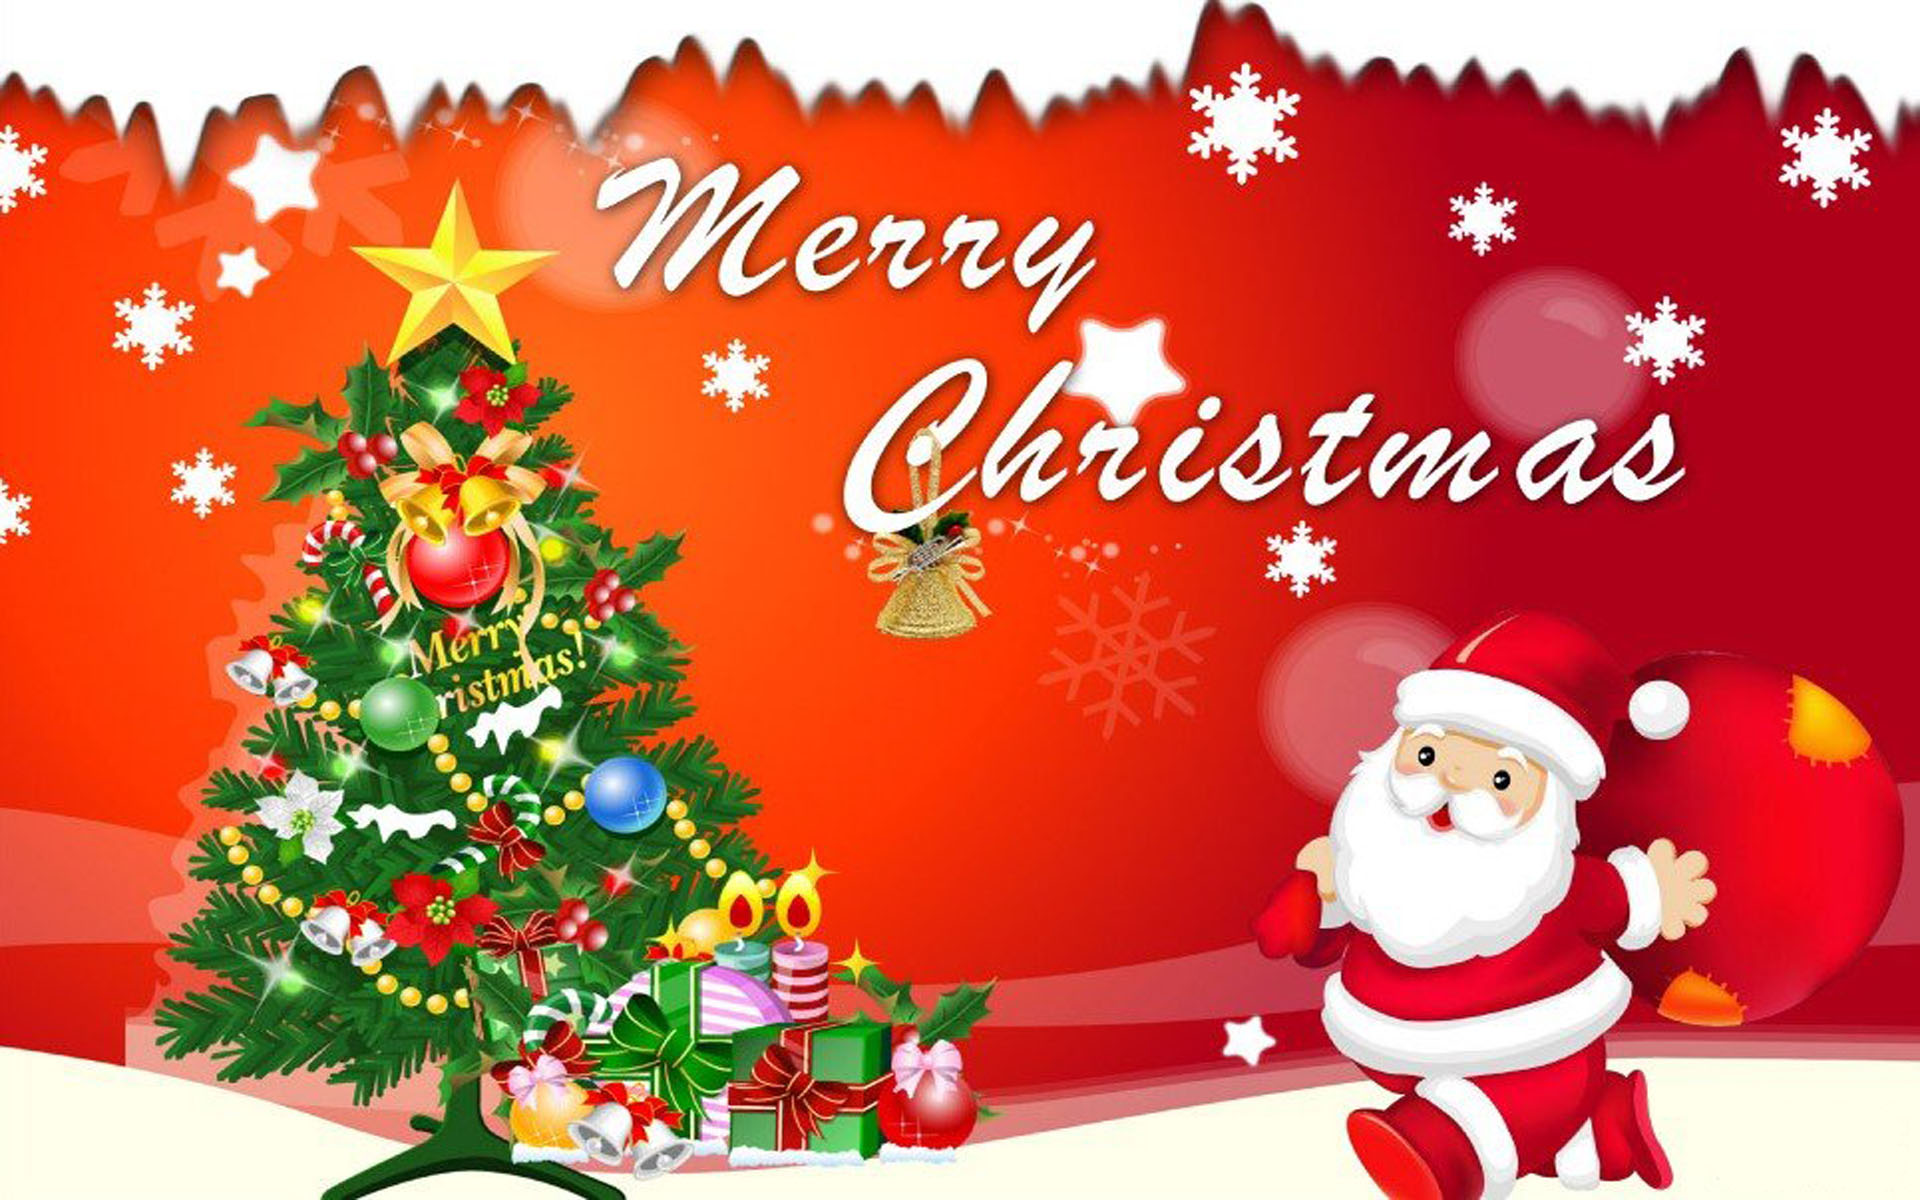 Merry Christmas Santa Claus Christmas Tree Decorations Greeting Card 1920x1200 : Wallpapers13.com